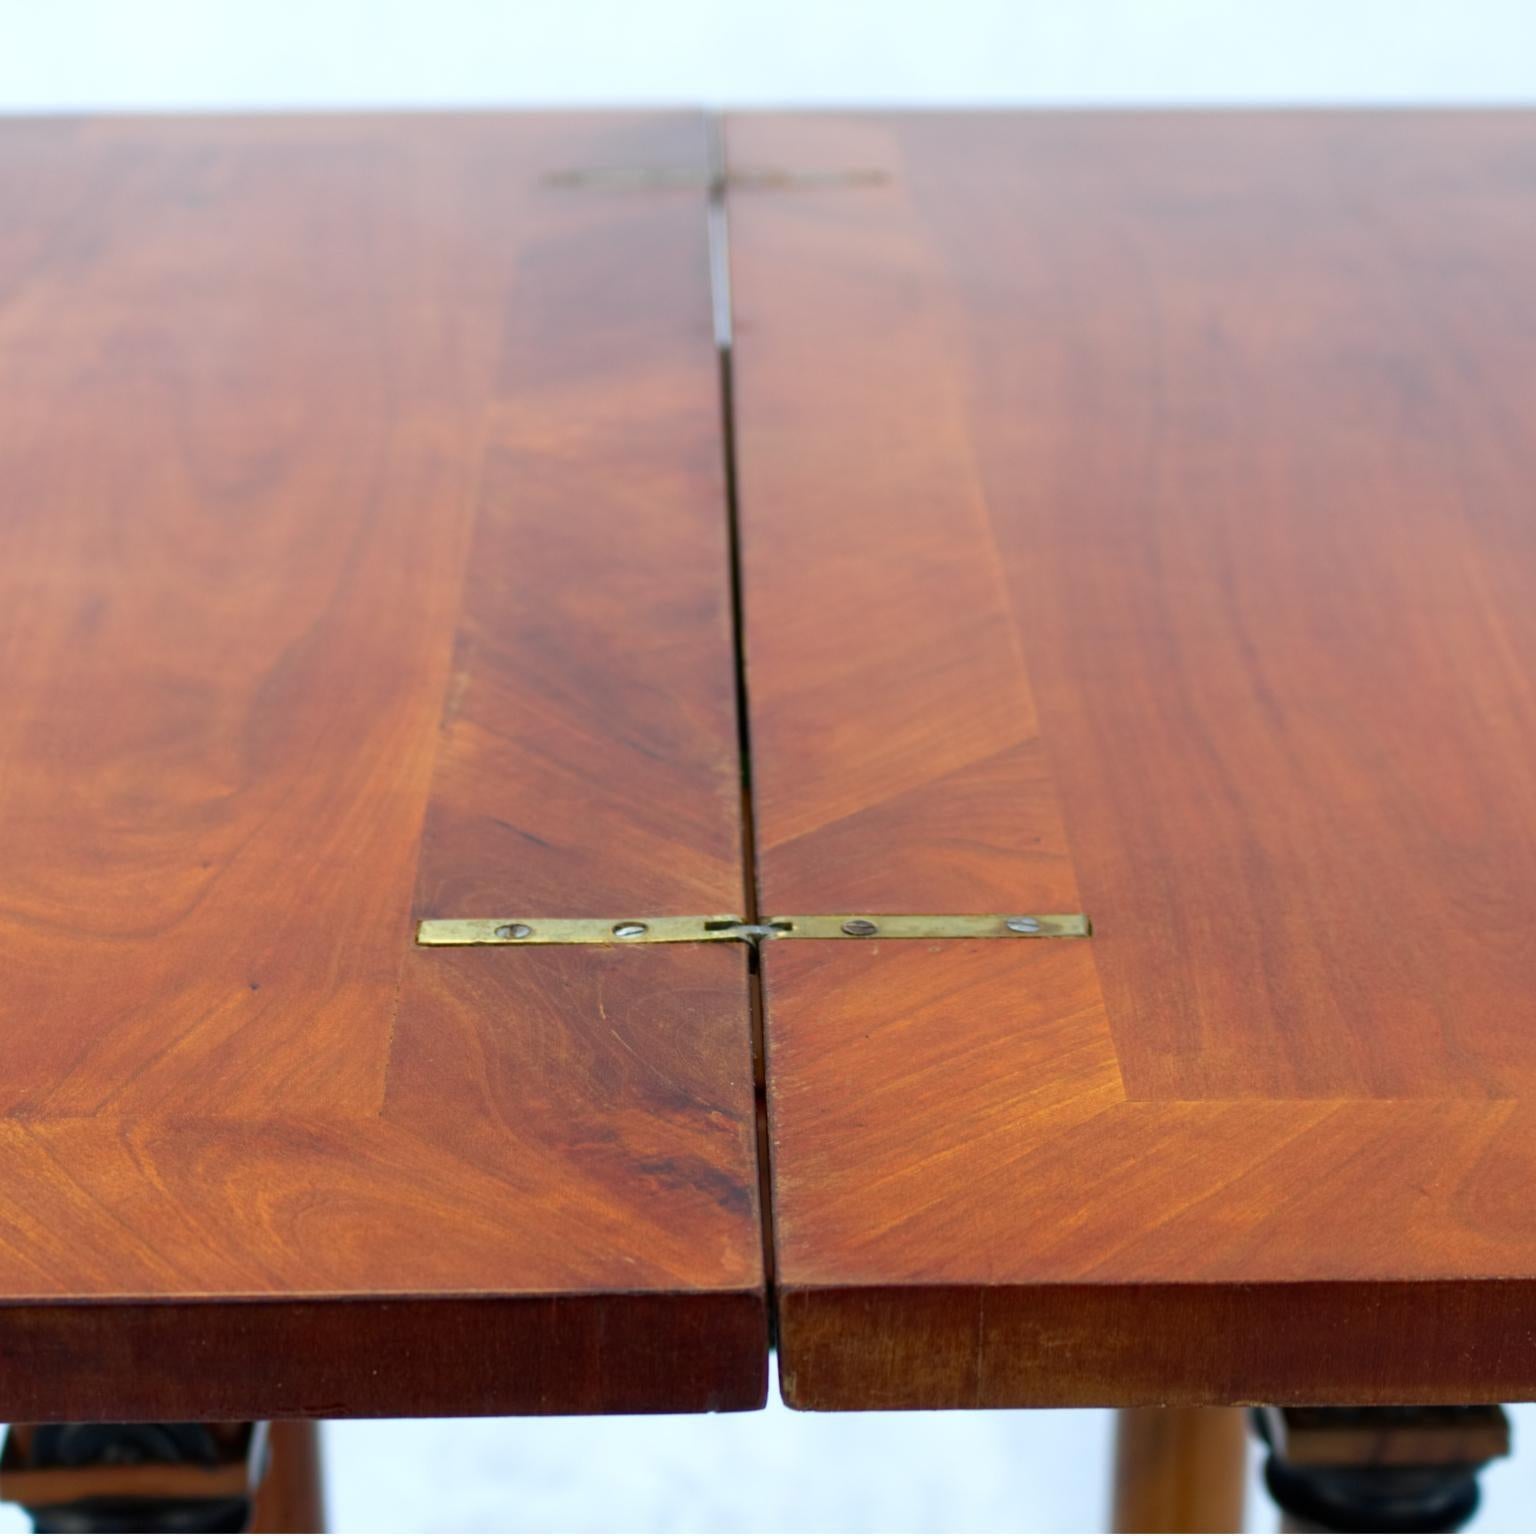 Biedermeier cherrywood console or flip top game table, mid-19th century.
Original condition.